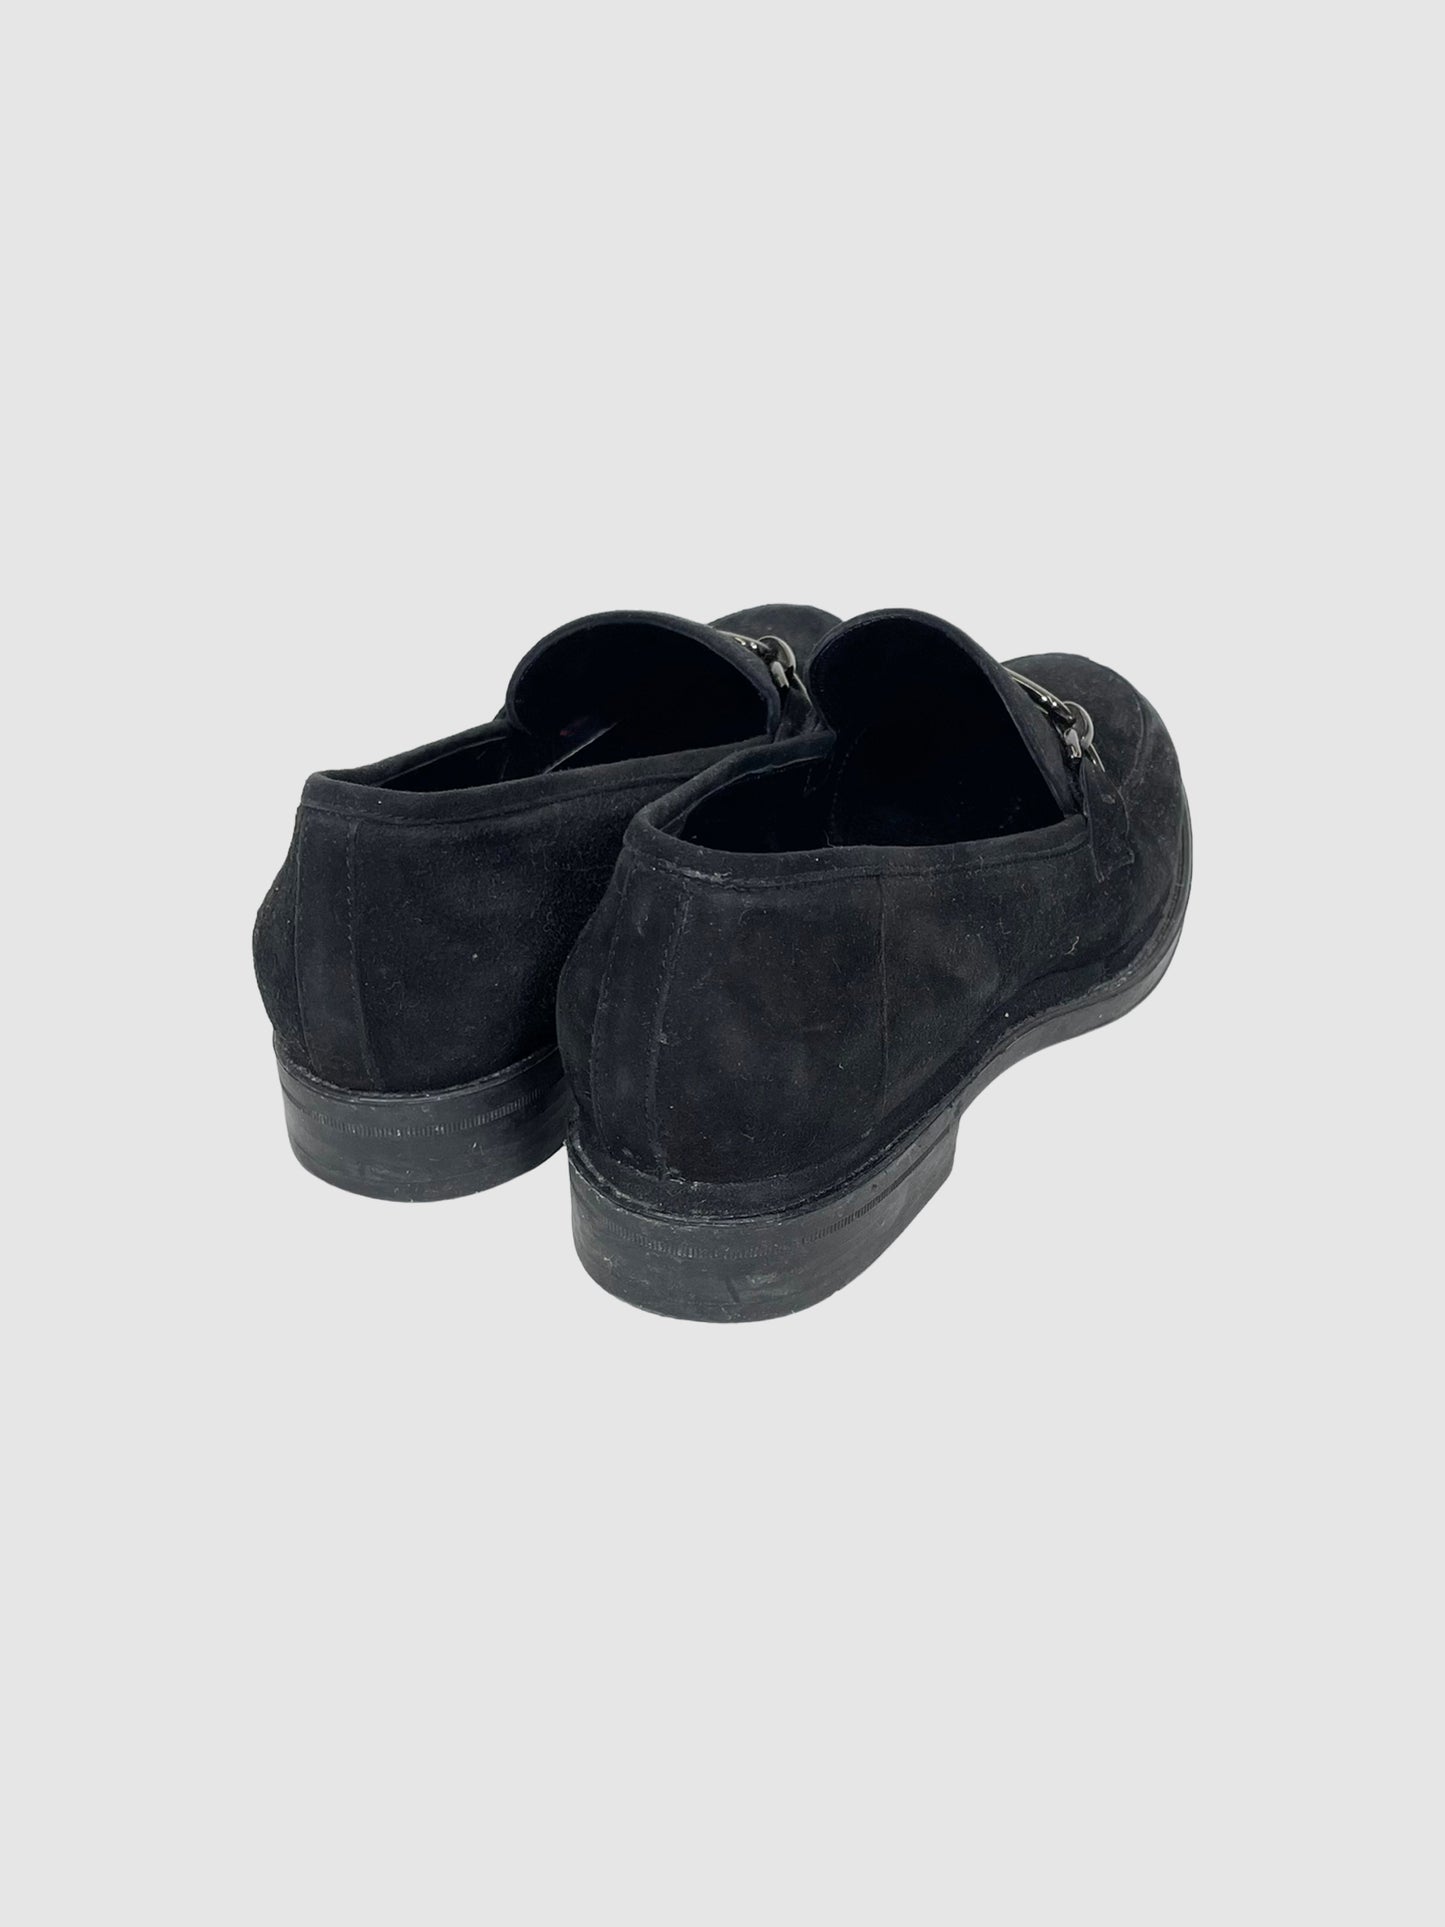 Aquatalia Suede Loafers - Size 9